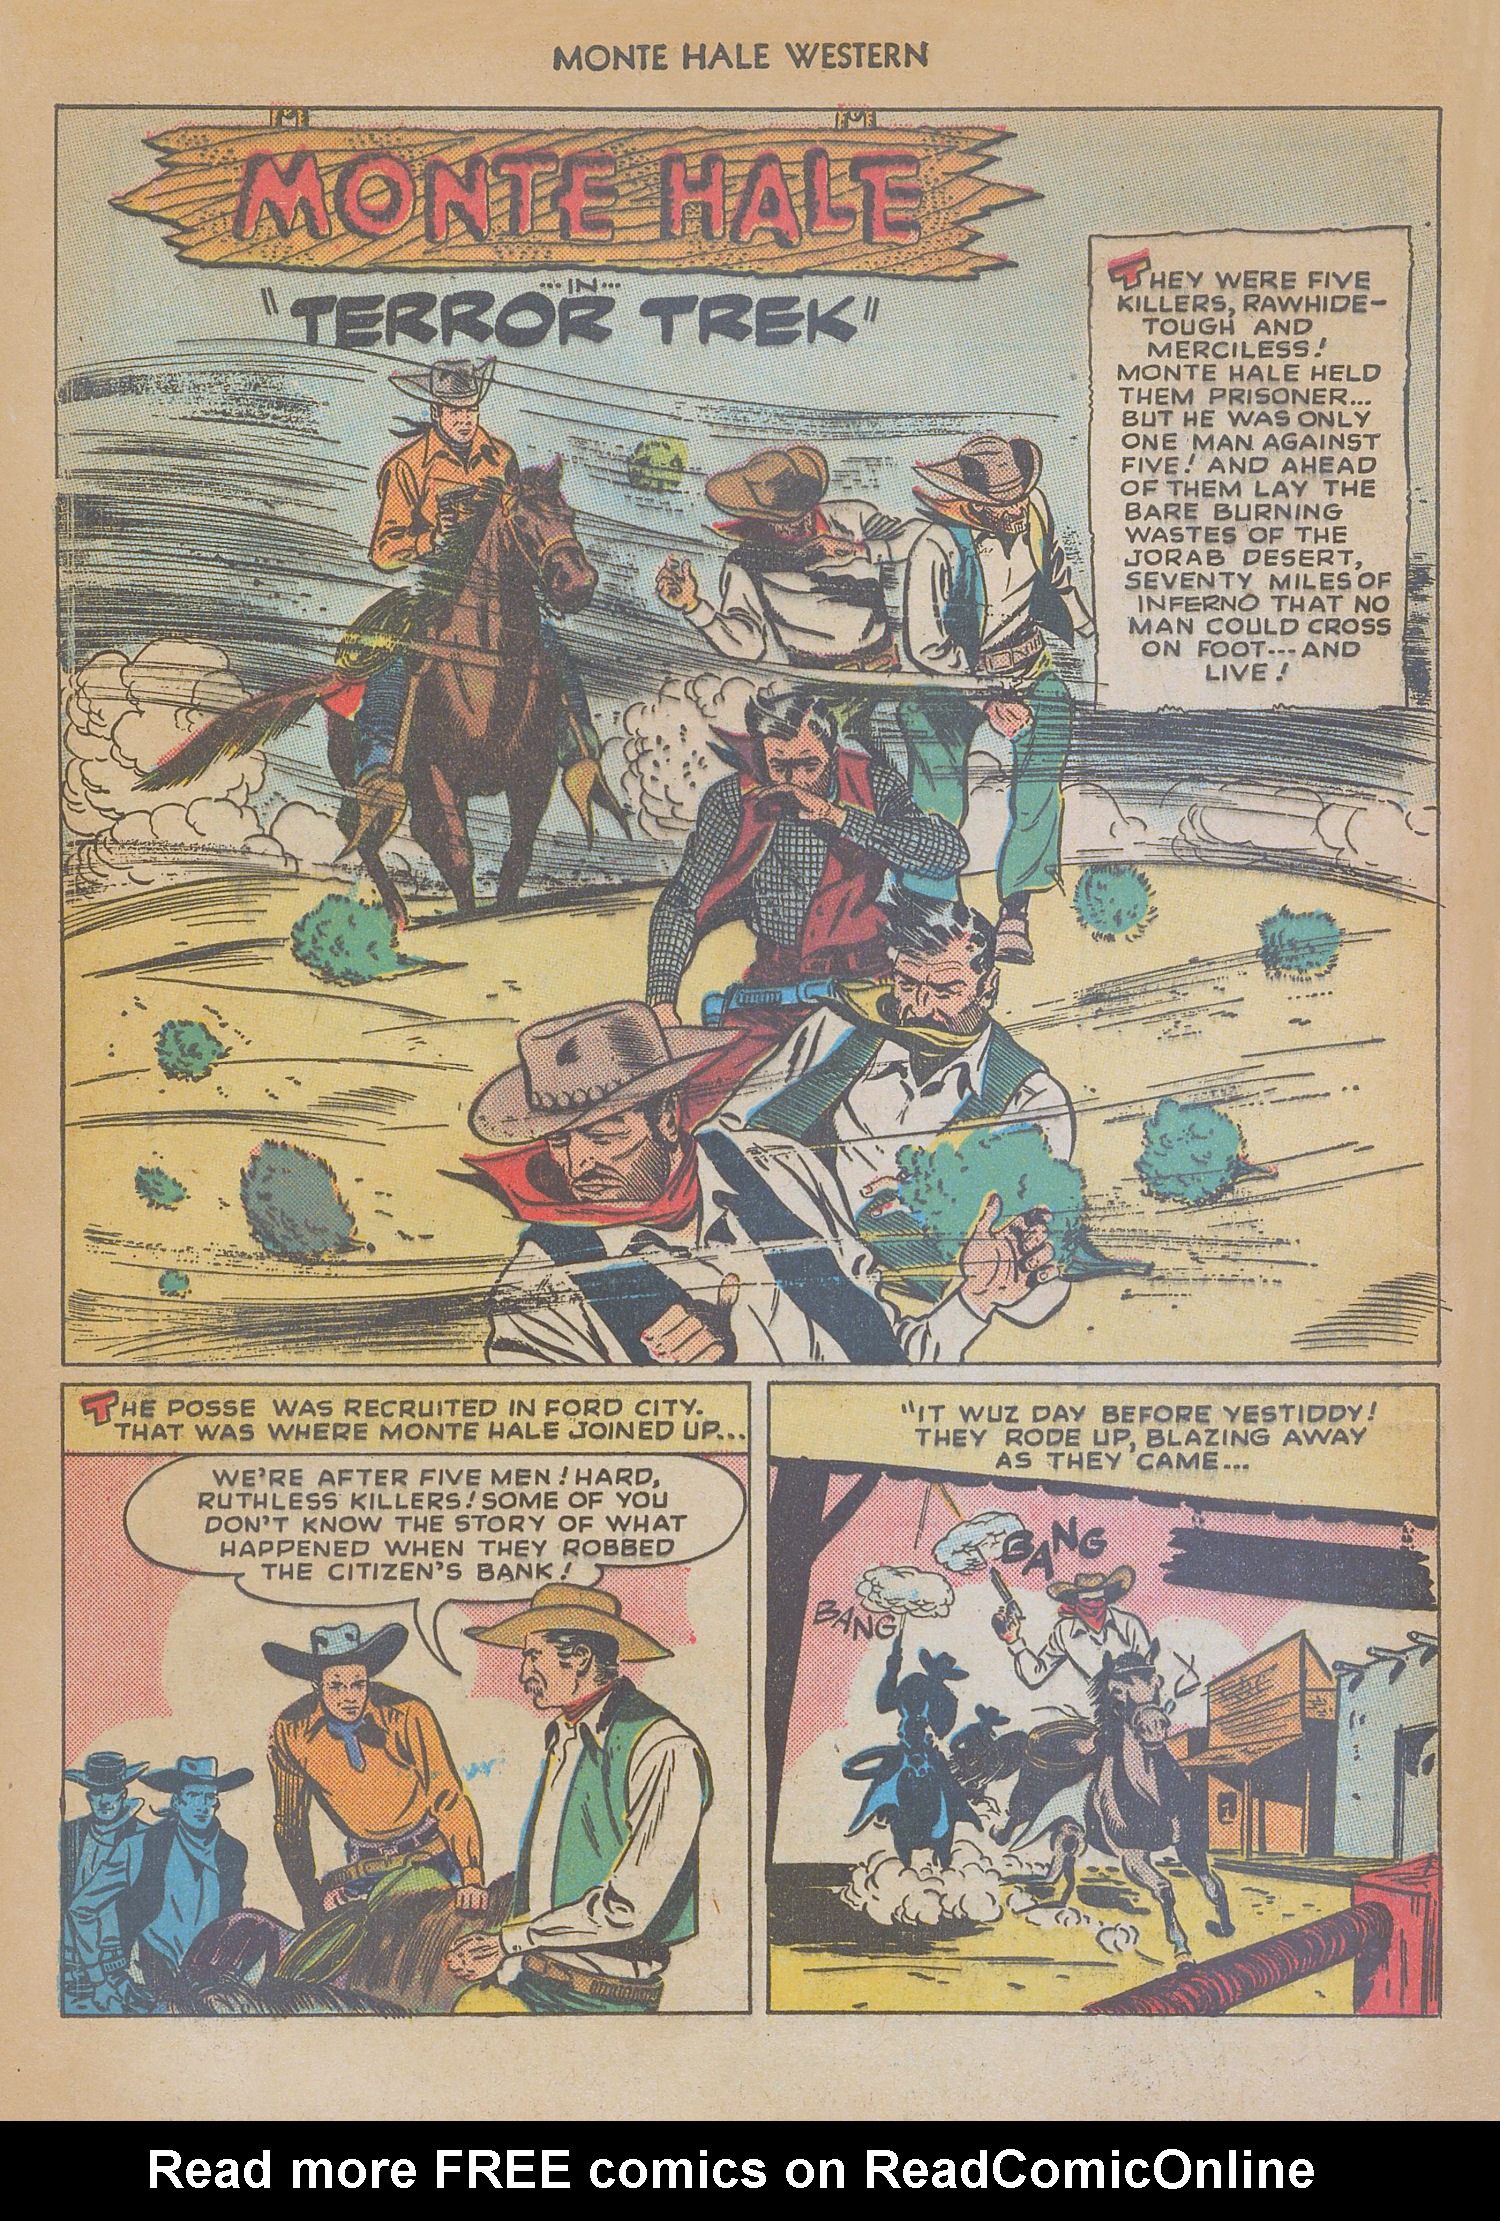 Read online Monte Hale Western comic -  Issue #32 - 4